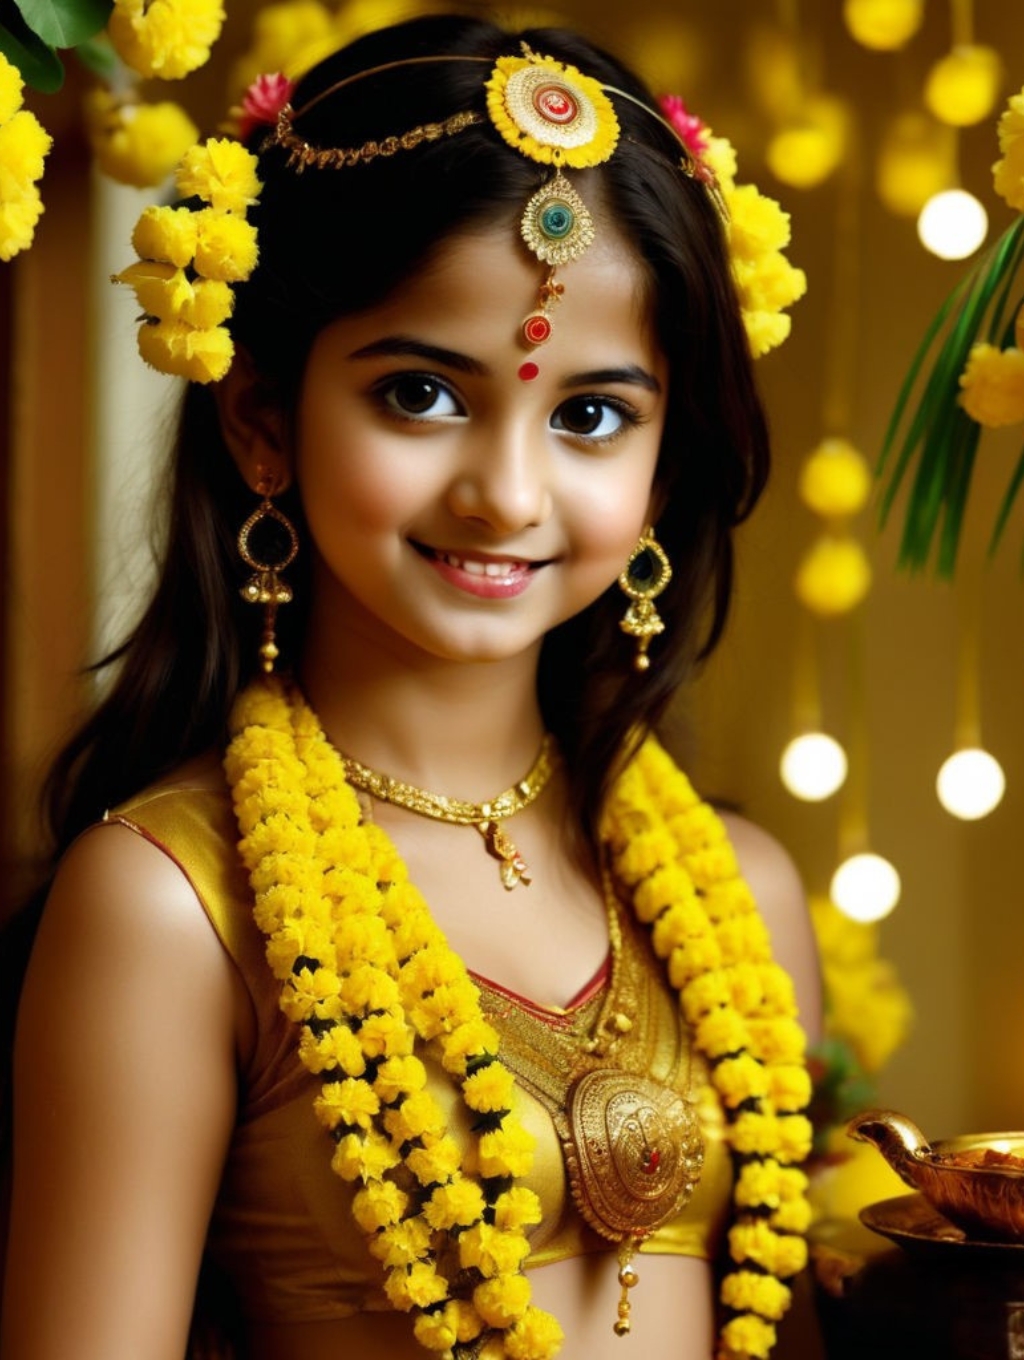 Indian Girl: Custom Frames & Portrait Photography-Theme:4